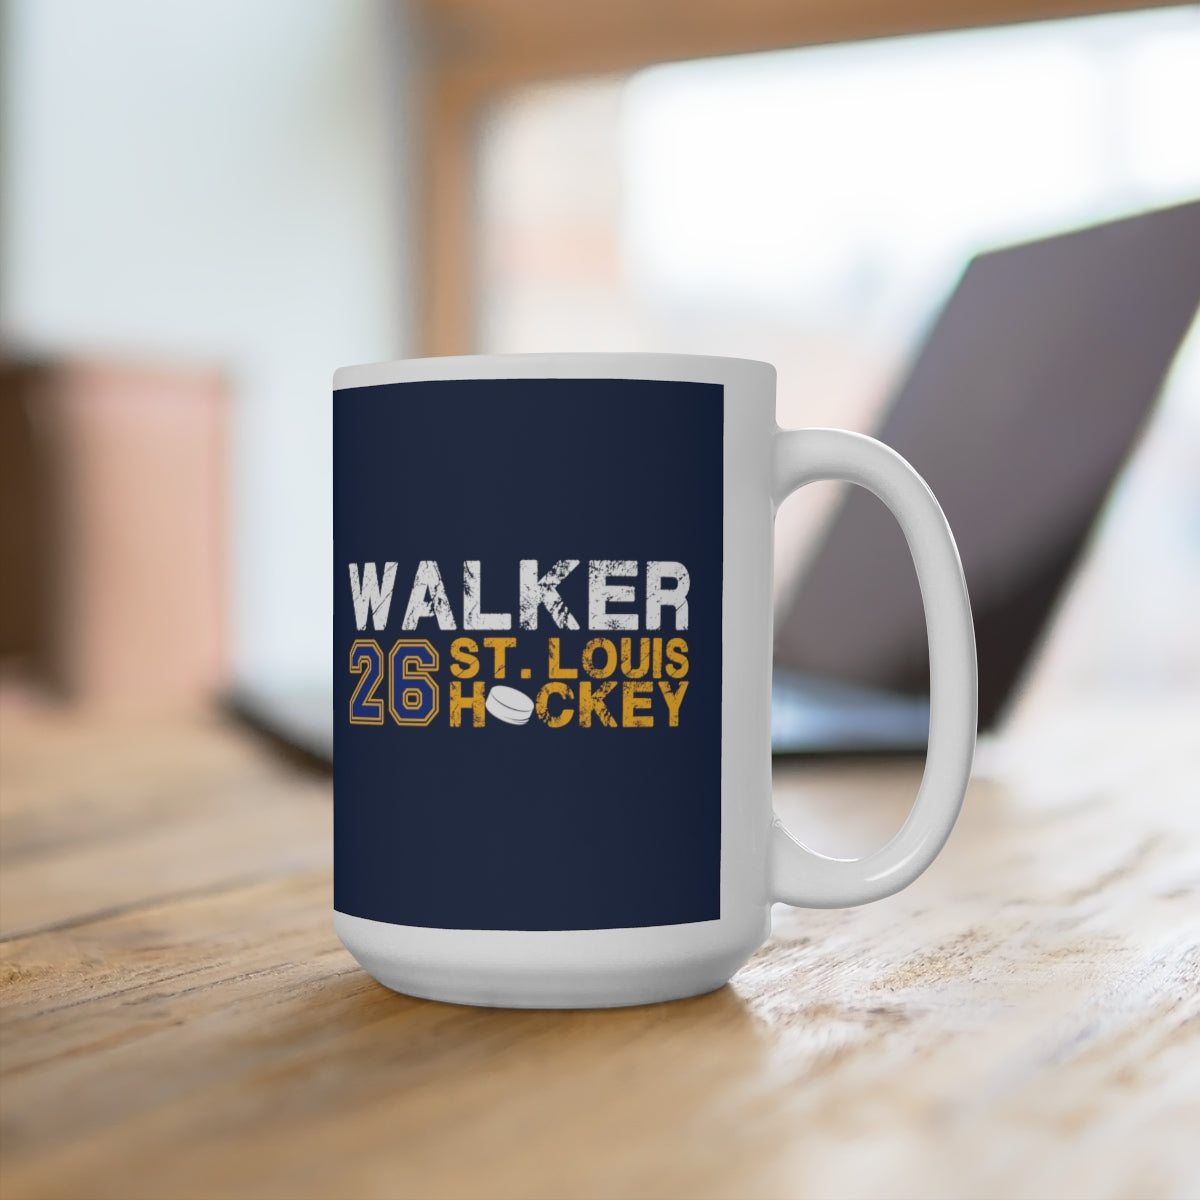 Walker 26 St. Louis Hockey Ceramic Coffee Mug In Navy, 15oz